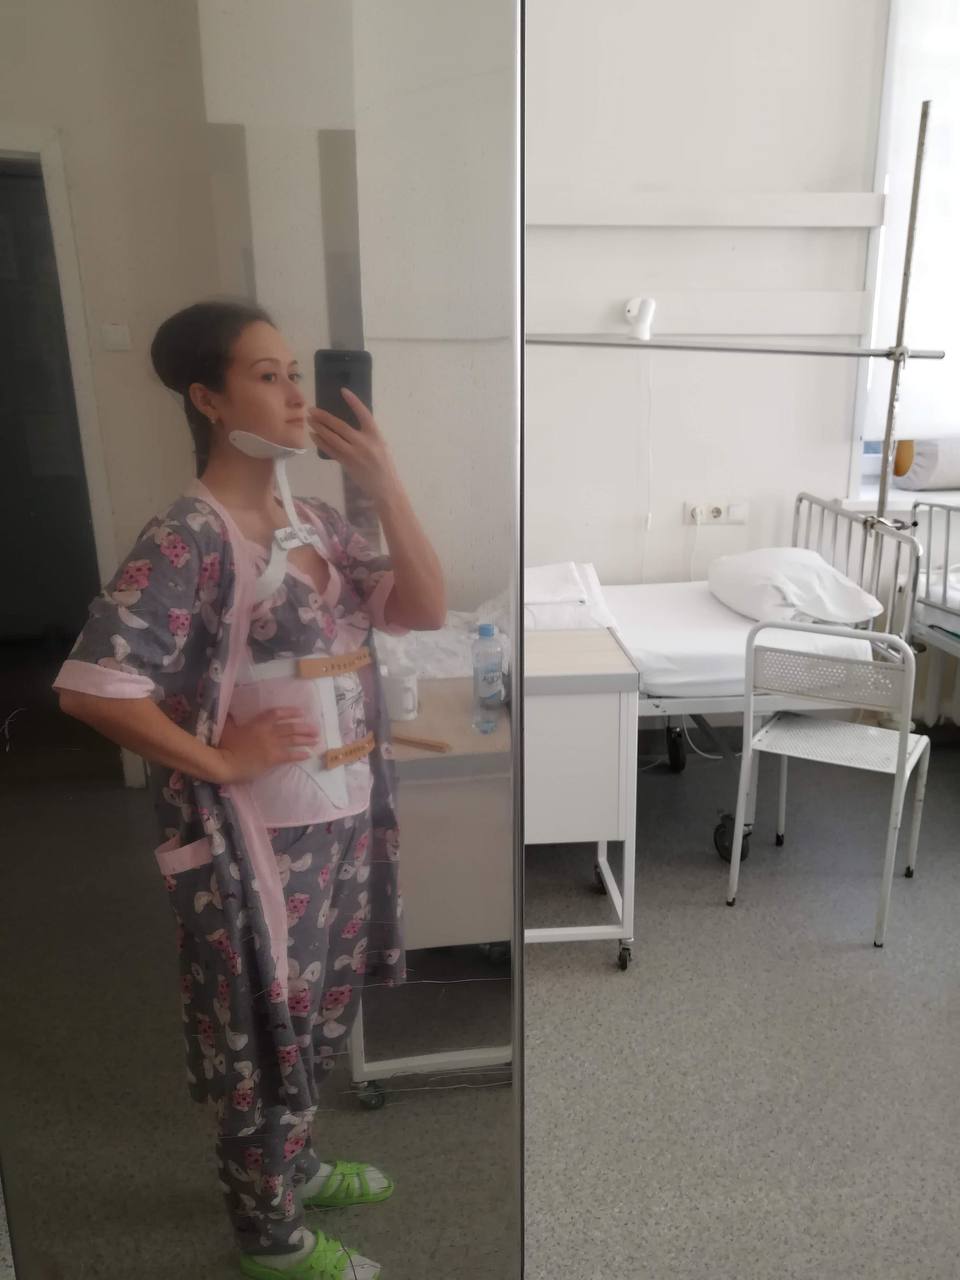  Алина Строкова в больнице с переломом позвоночника